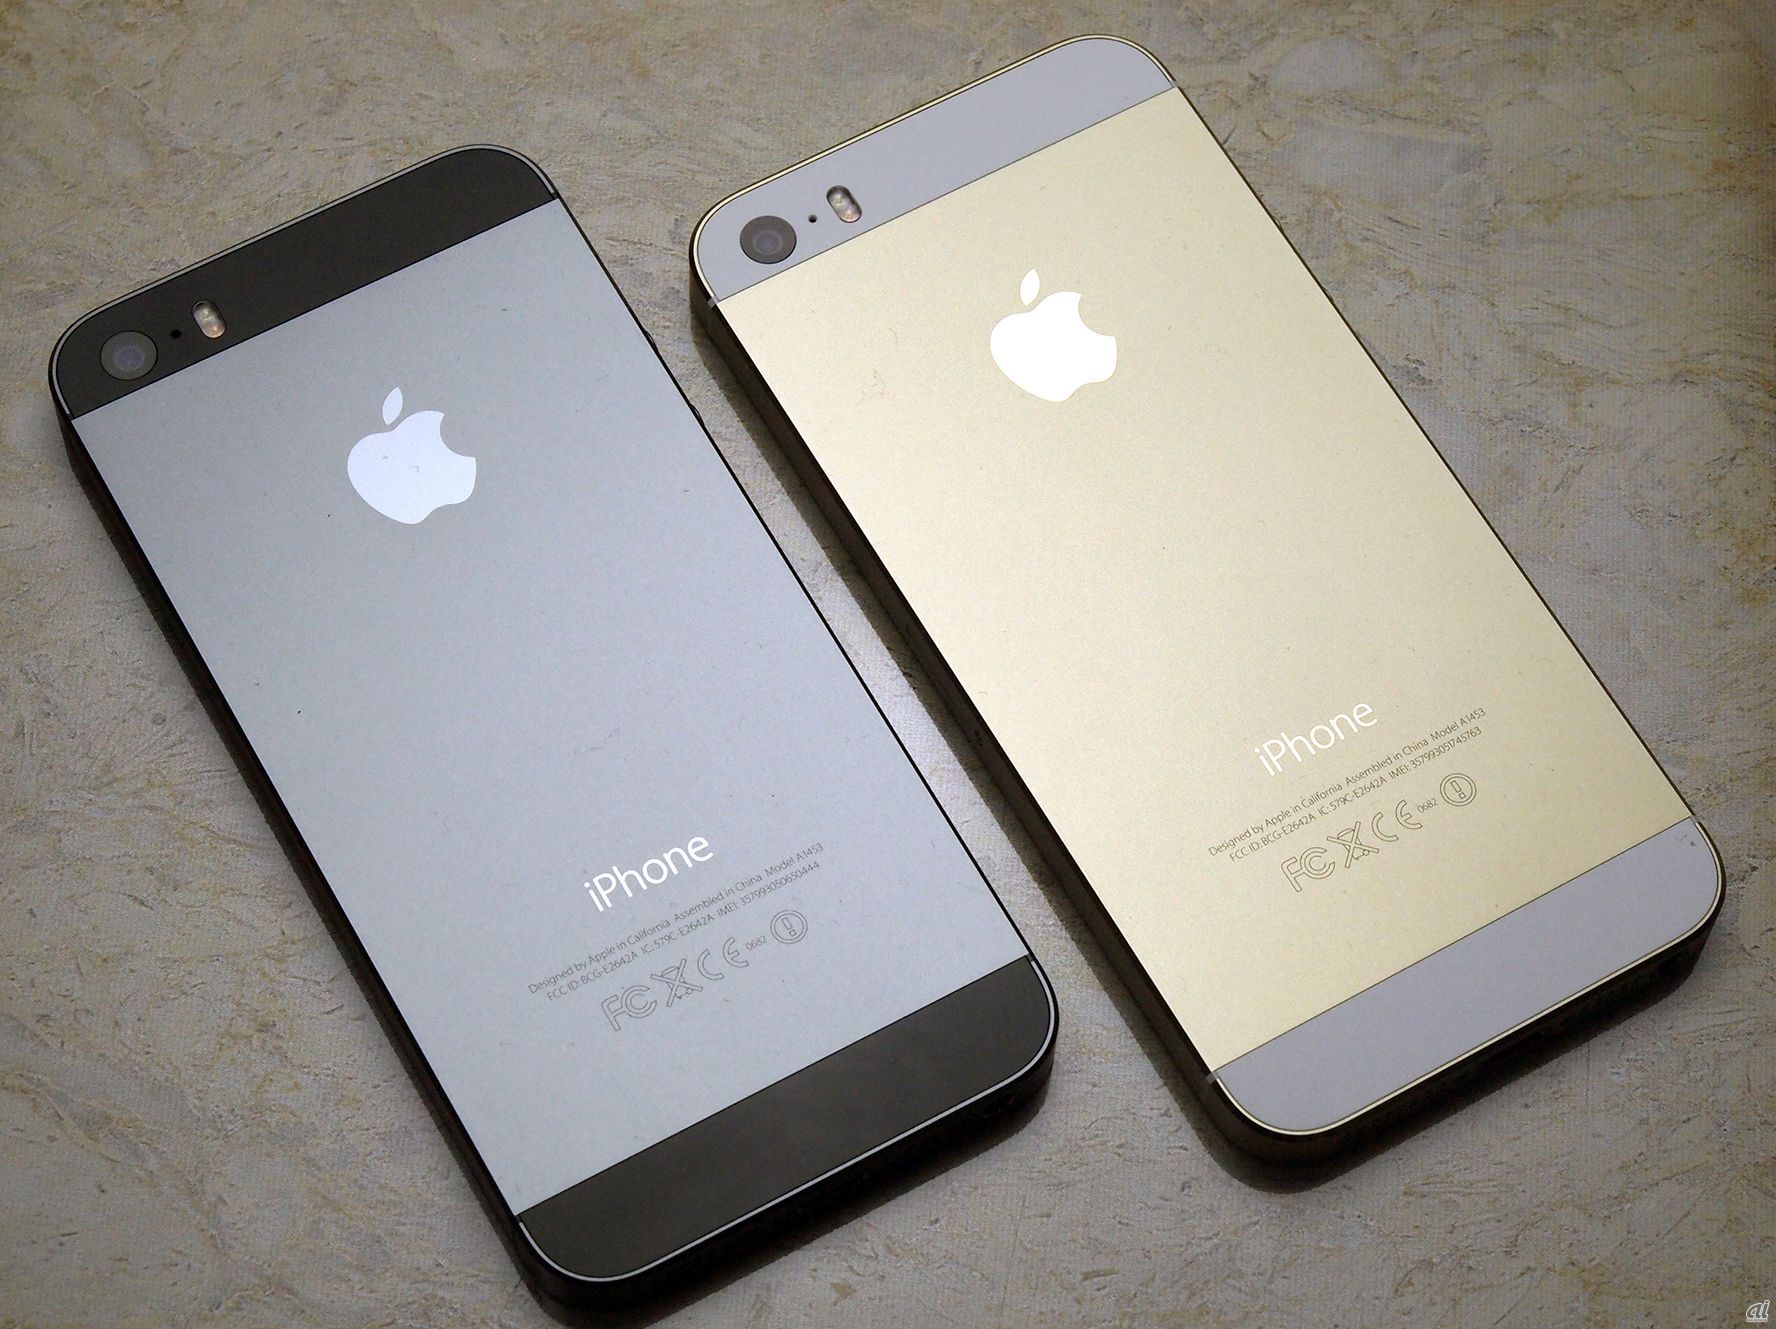 iPhone 5s スペースグレー - スマートフォン本体